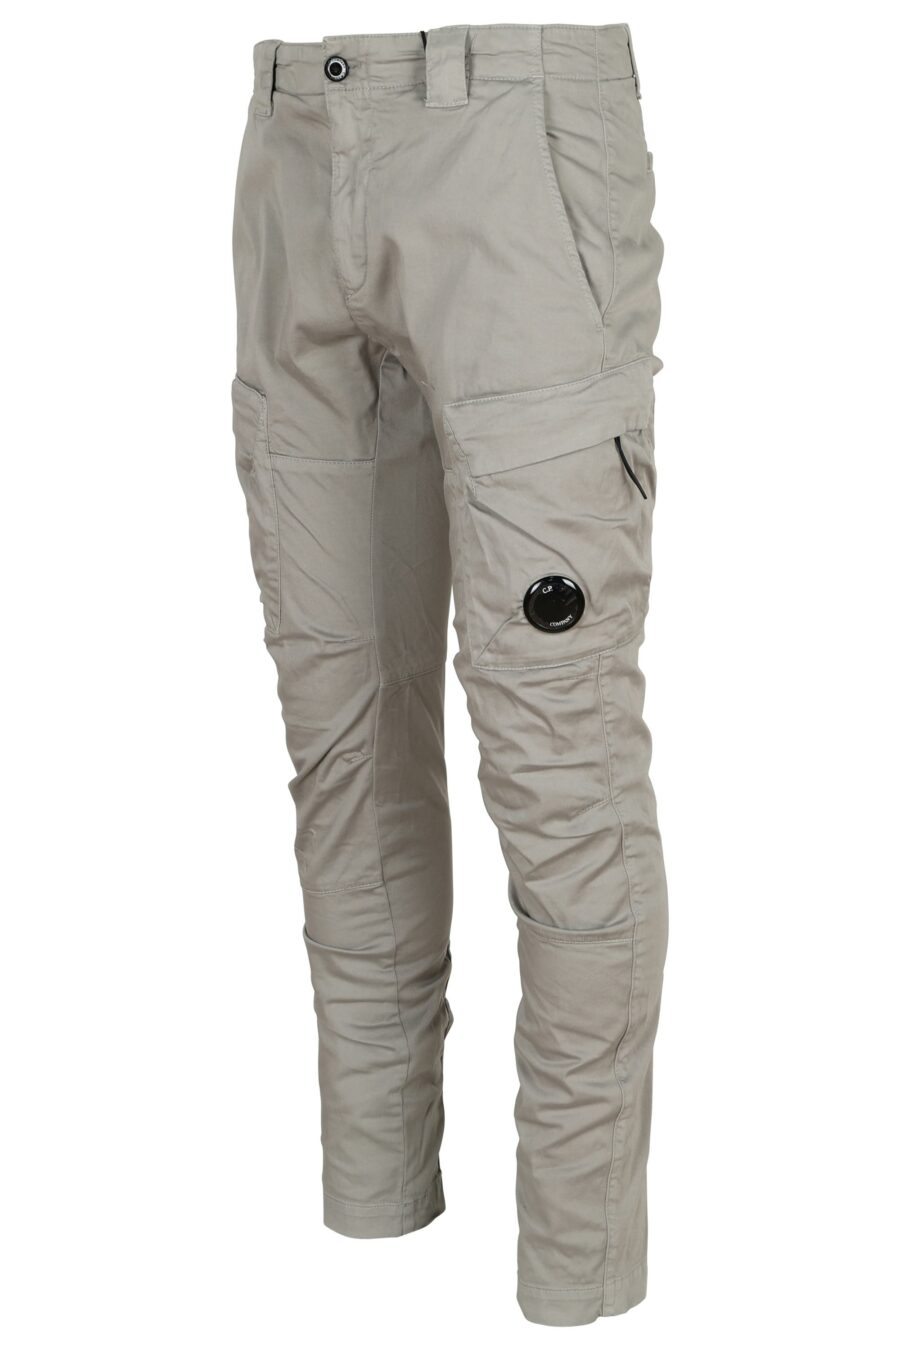 Pantalon cargo gris avec lentille logo - 7620943722895 1